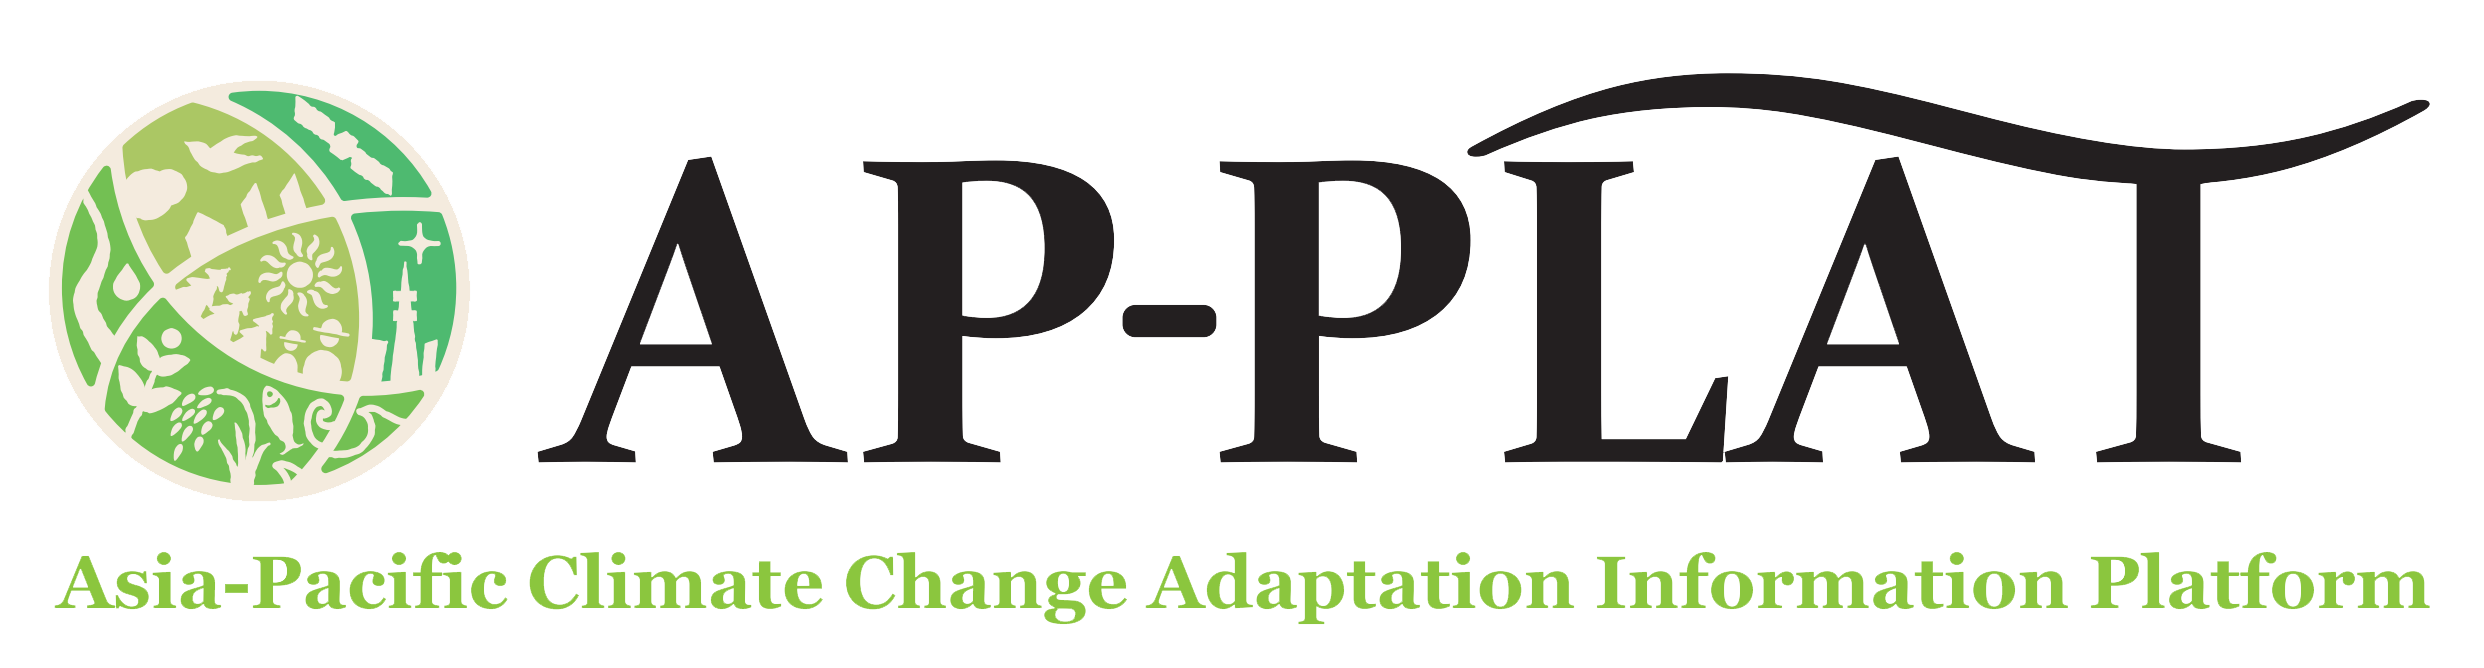 Asia-Pacific Climate Change Adaptation Information Platform